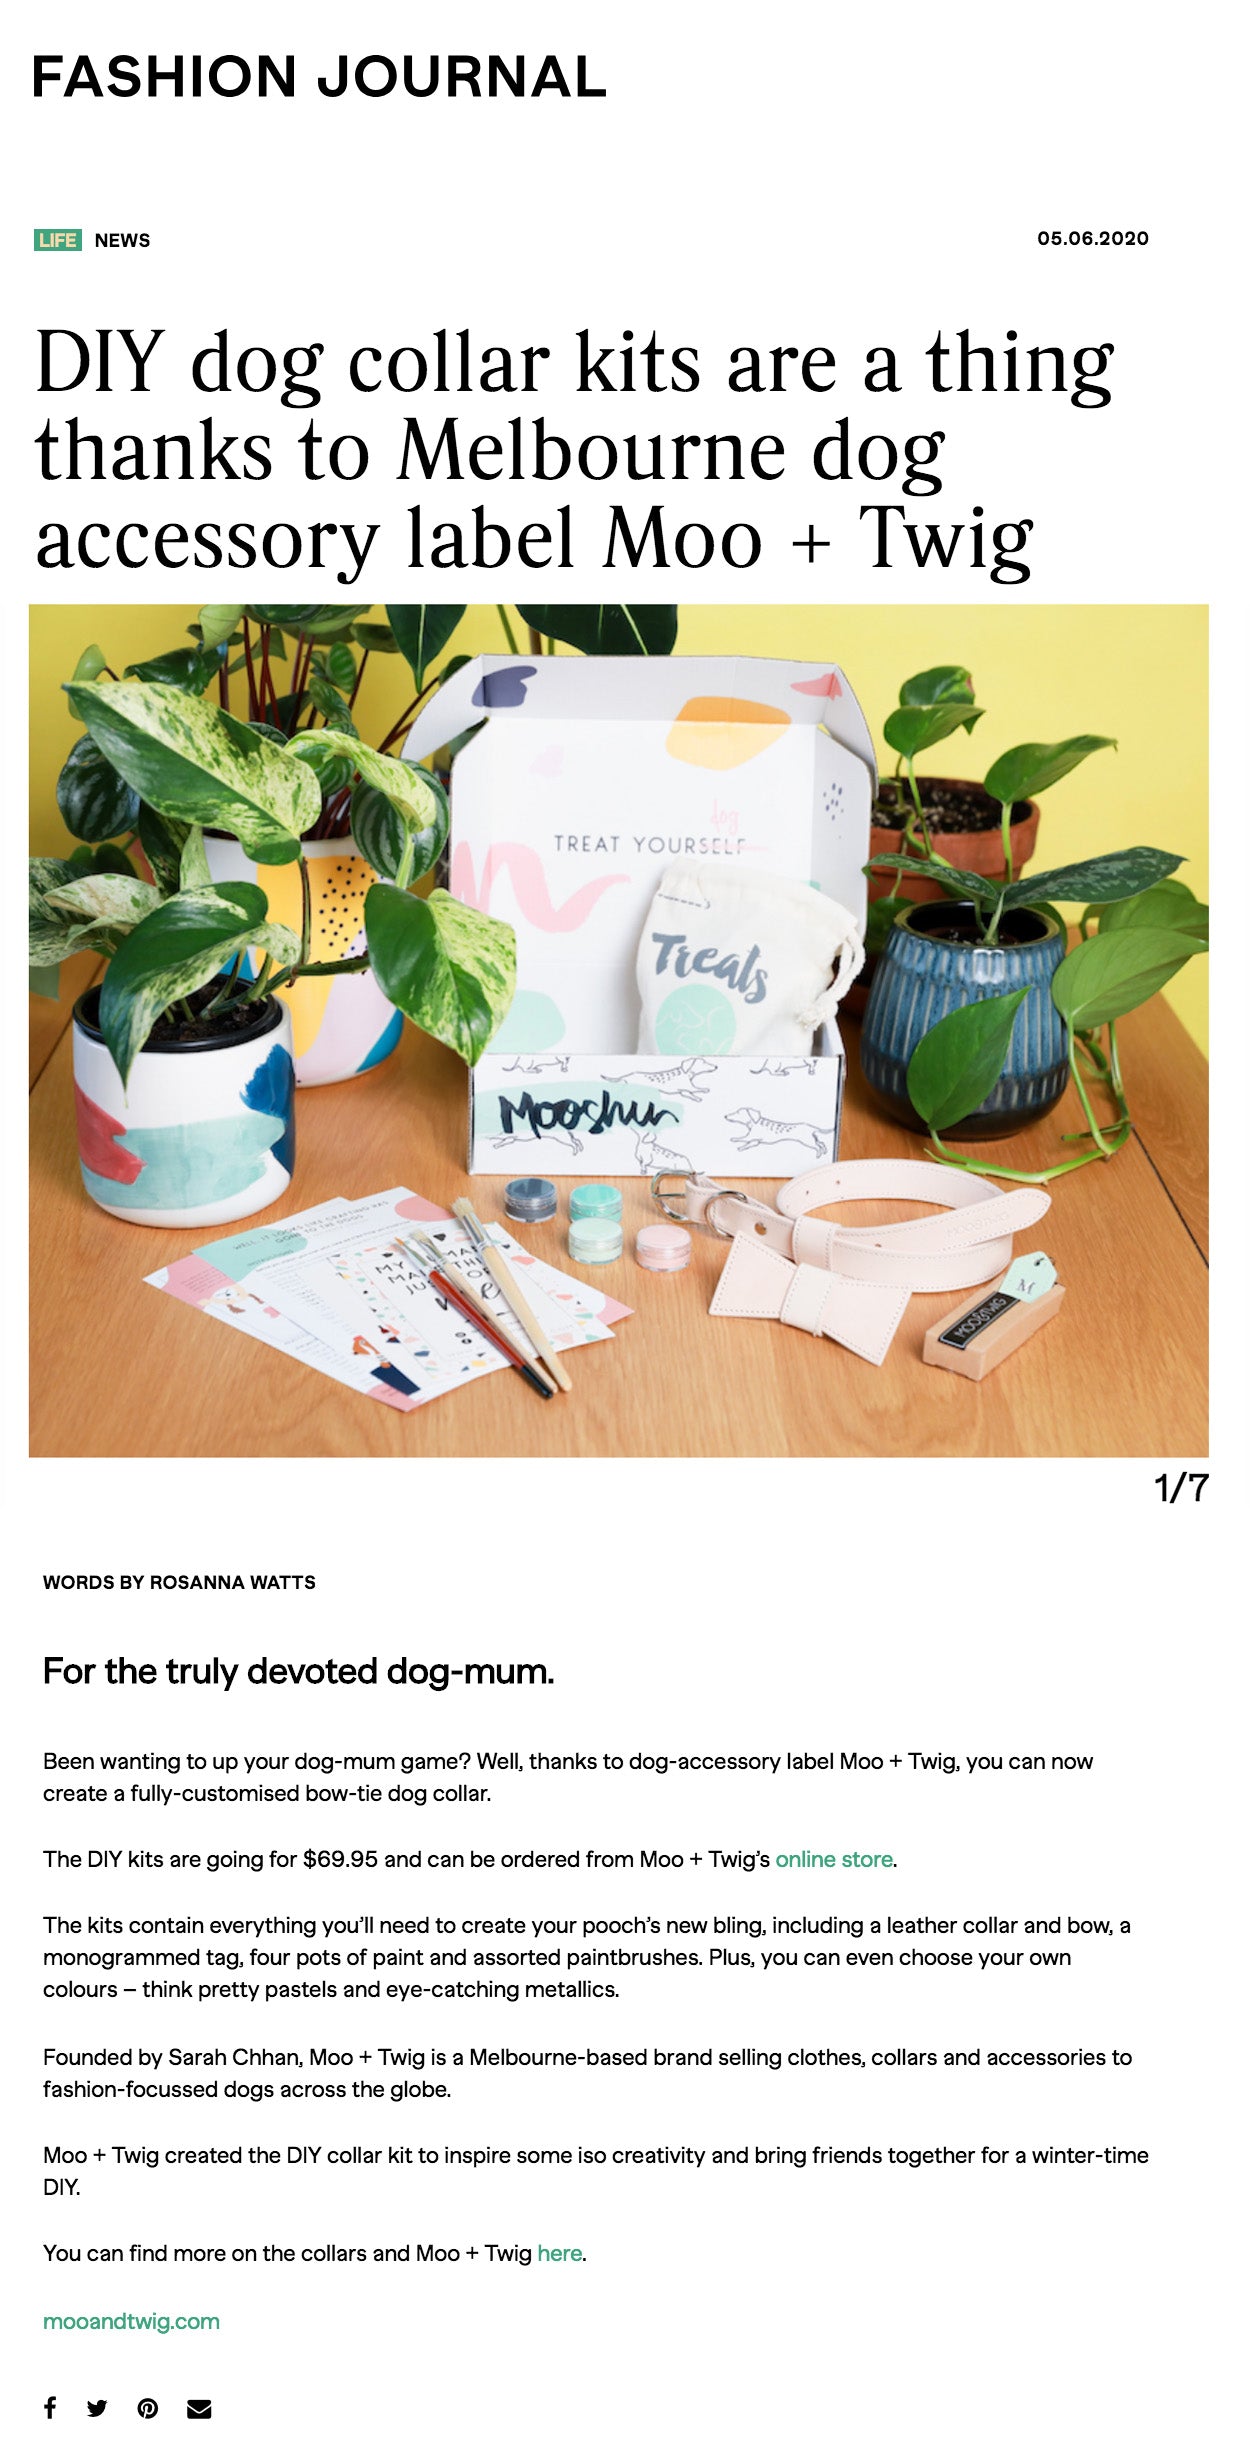 Fashion Journal Magazine - Moo + Twig DIY Dog Collar Kit